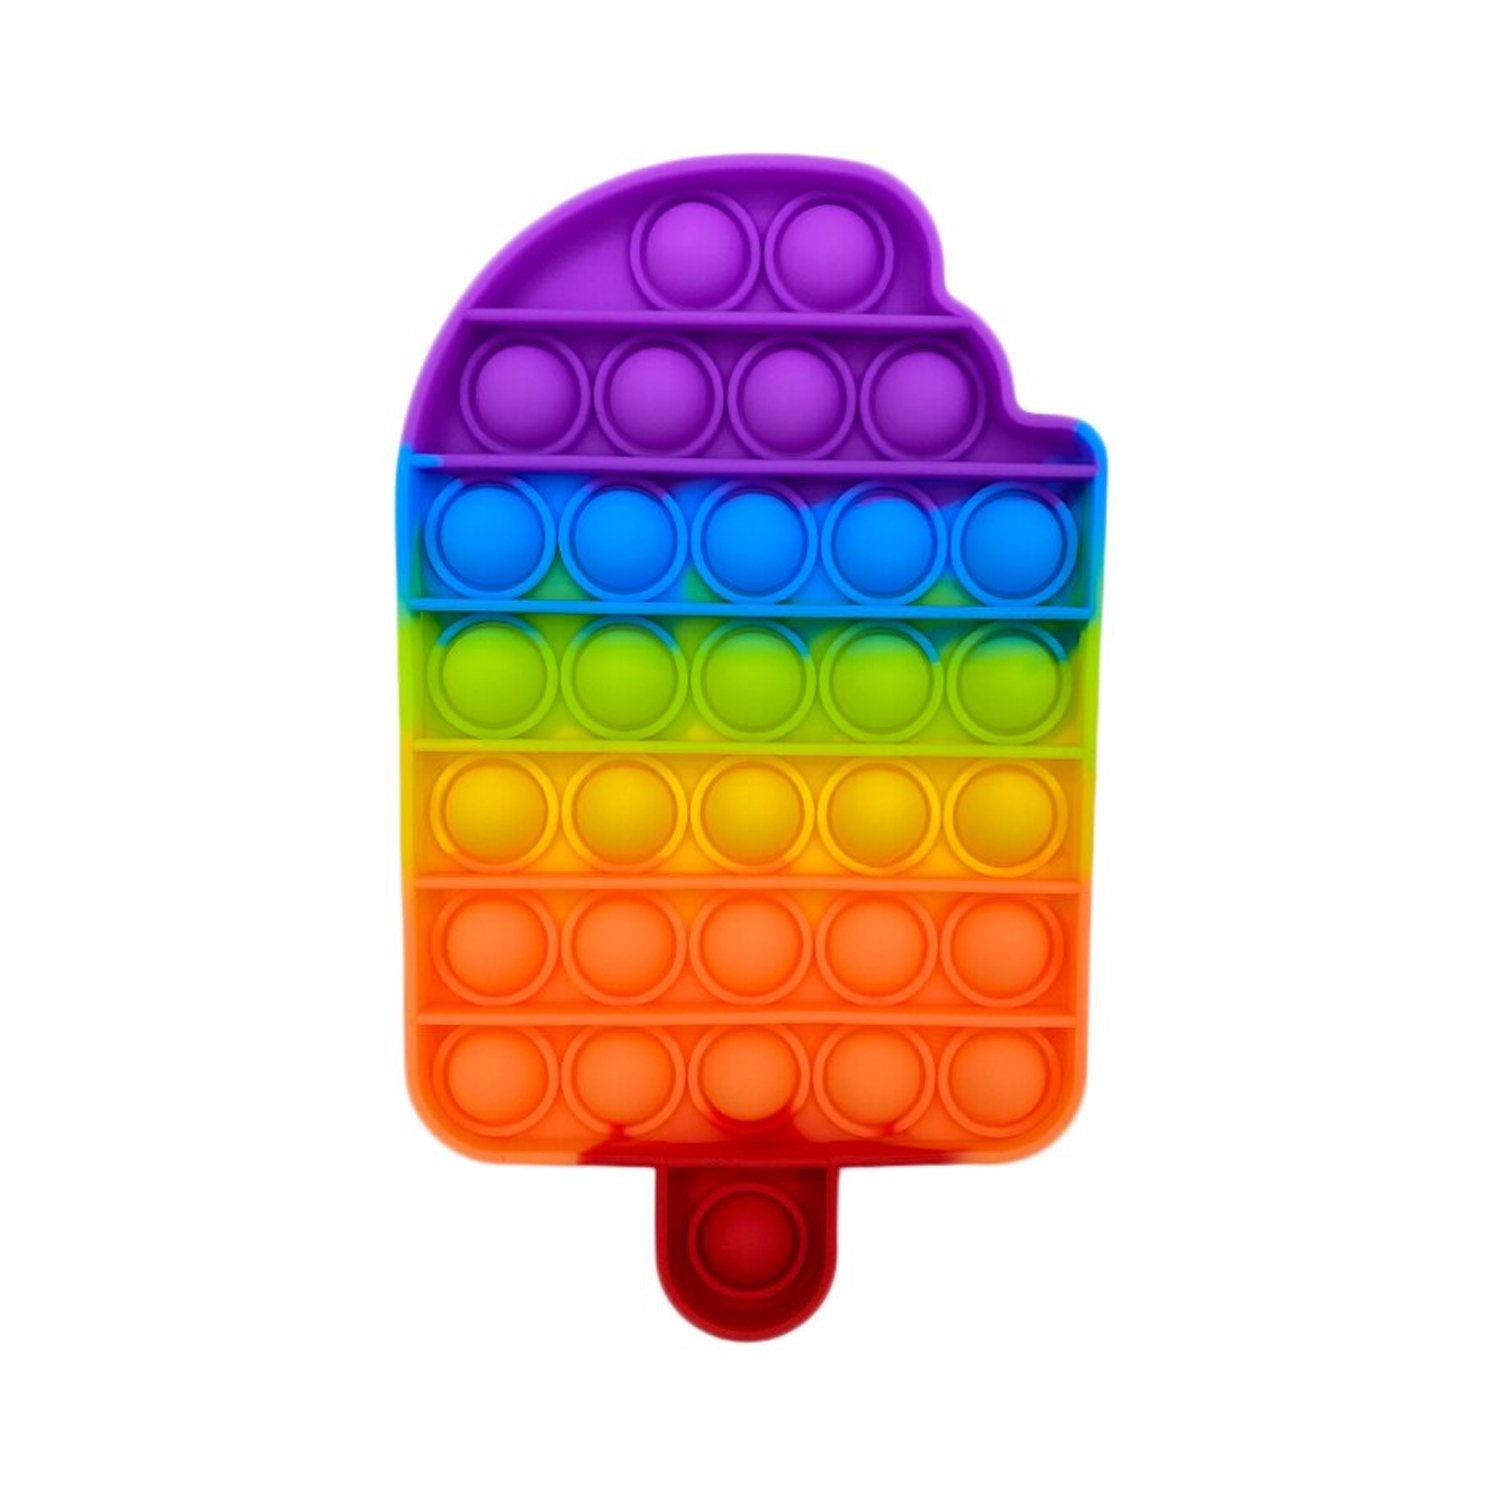 4716 Ice Cream Candy Shape Pop Fidget Toy Push Pop Bubble Fidget Sensory Toy for Kids and Adults Fidget Popper Stress Reliever Sensory Fidget Poppers